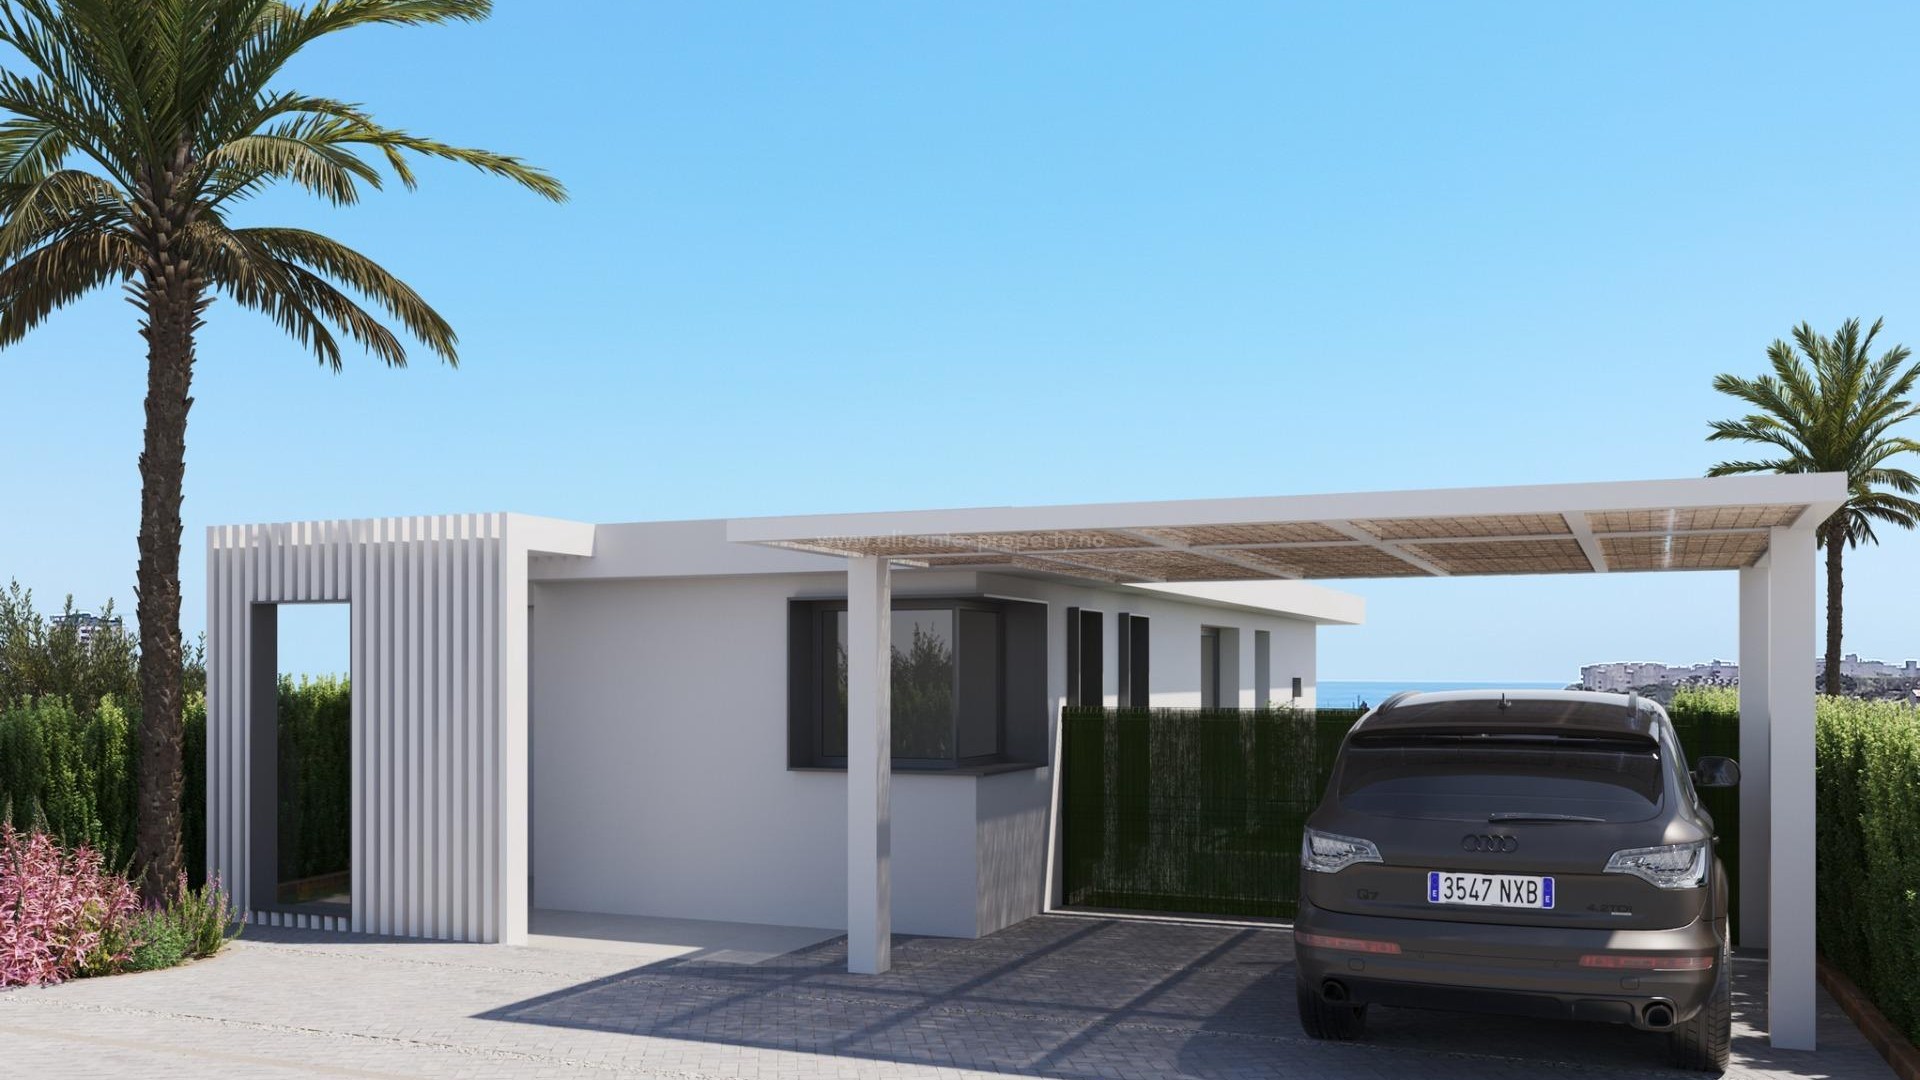 Exclusive house/villa in San Juan de Alicante, 4 bedrooms, 3 bathrooms, private pool, large patio, basement possible, 3 different models